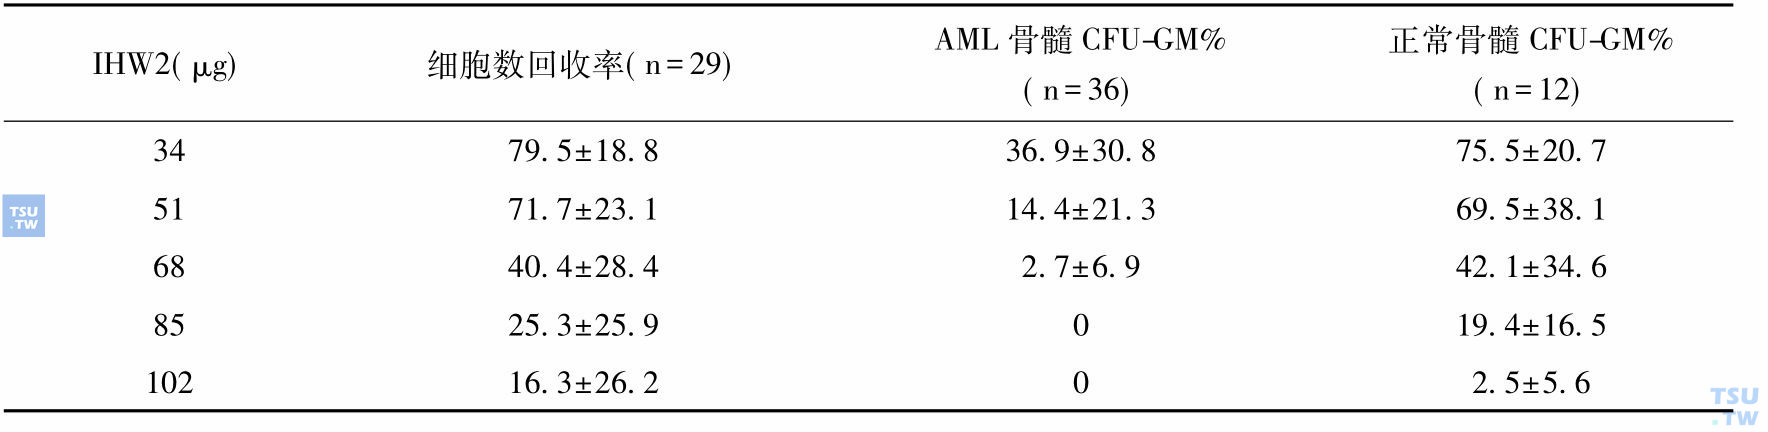 IHW2对CFU-AML和正常CFU-GM的杀伤作用（%，X±s）